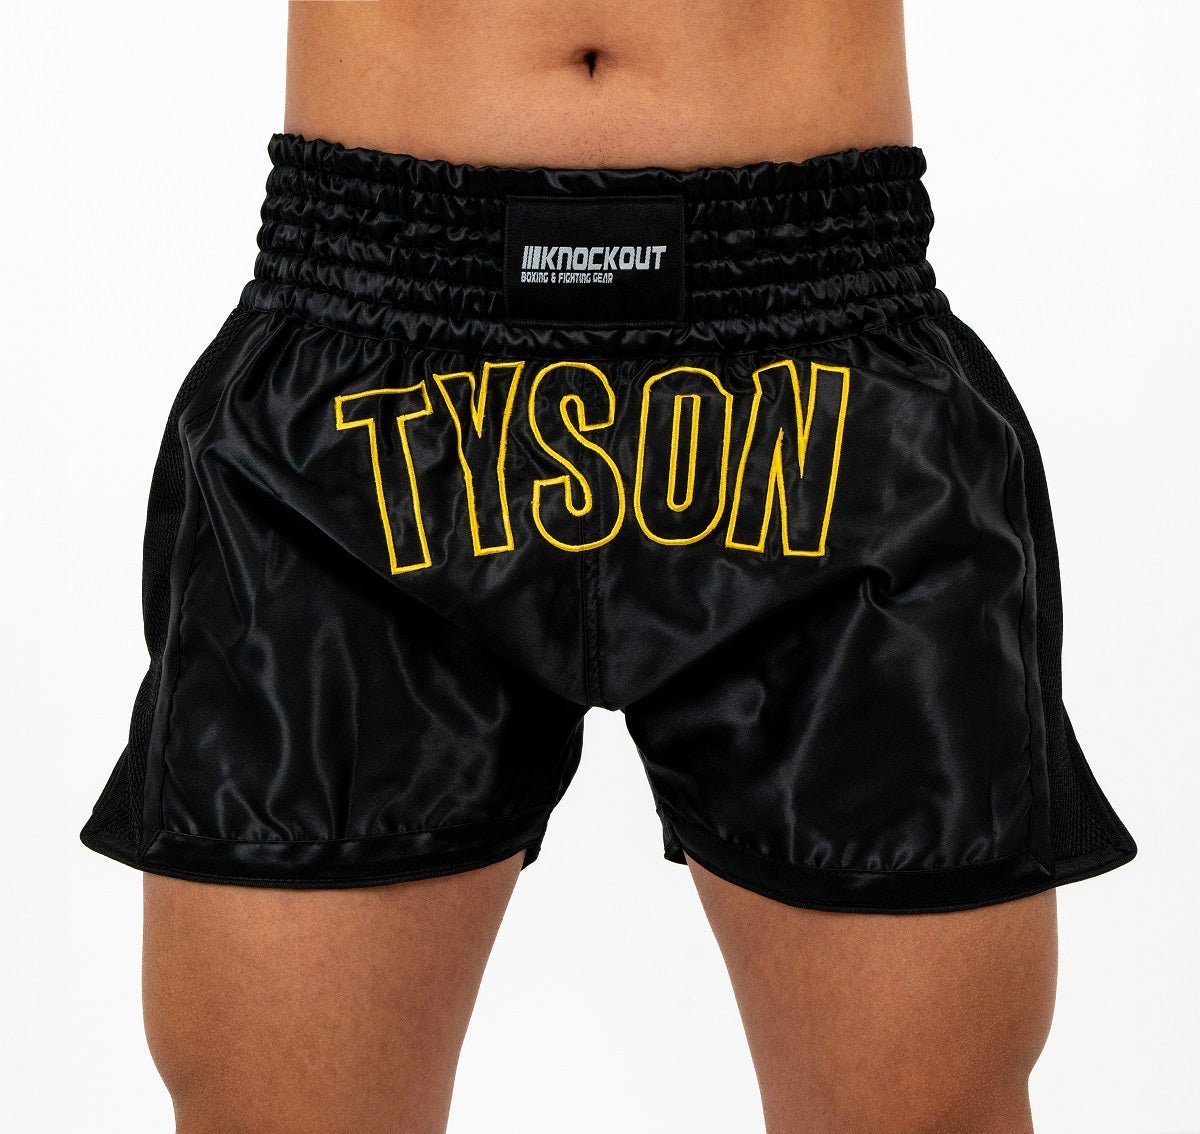 Sort Knockout Thai Tyson 2.0